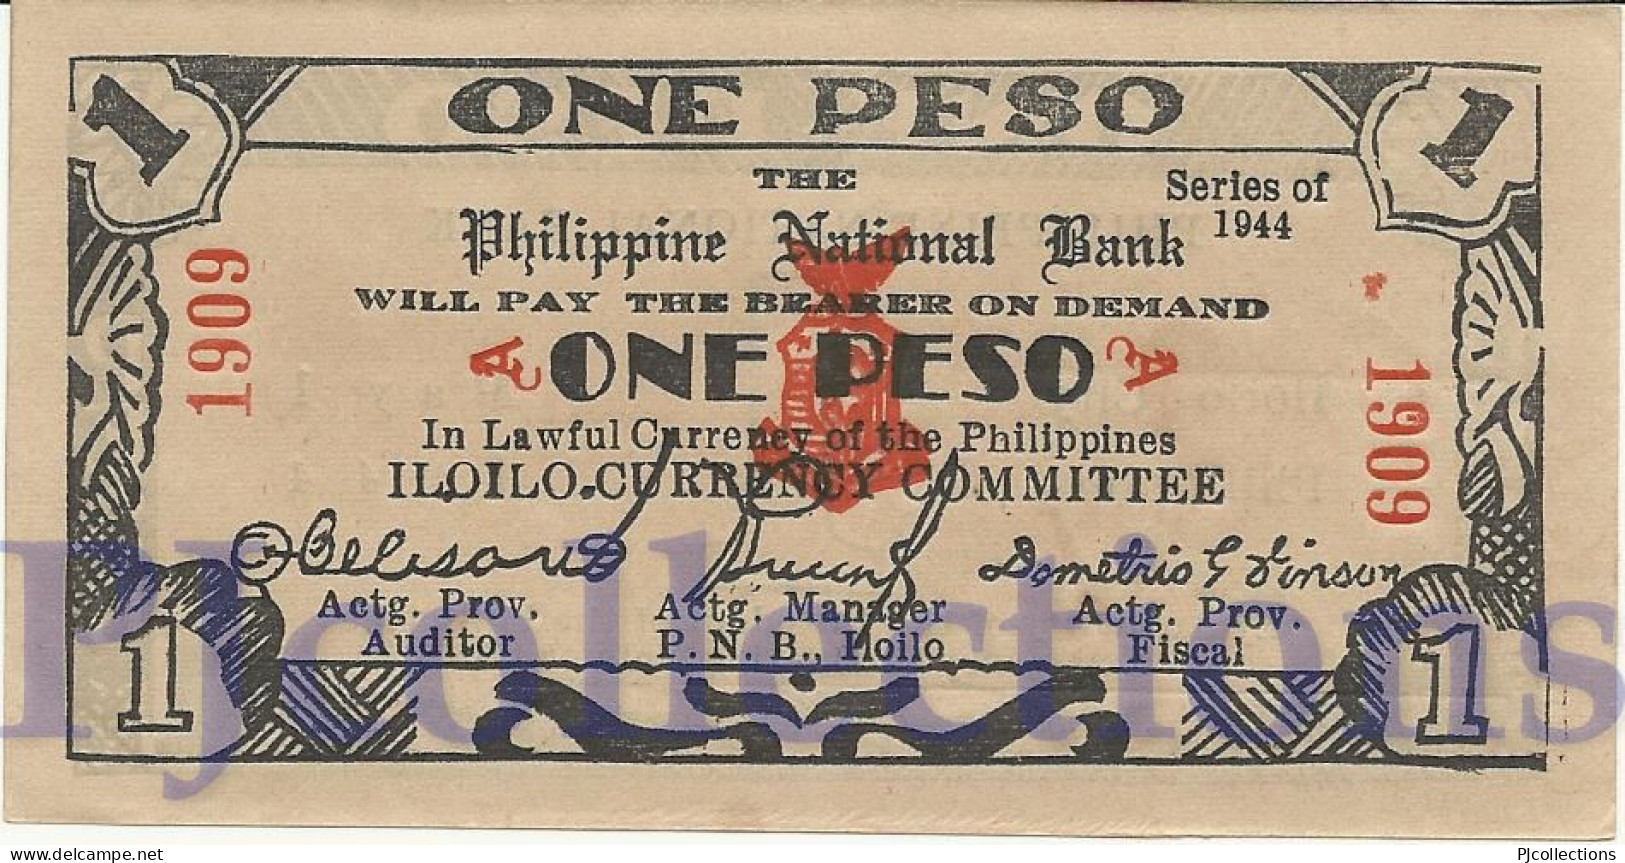 PHILIPPINES 1 PESO 1944 PICK S339 AUNC EMERGENCY BANKNOTE - Filipinas